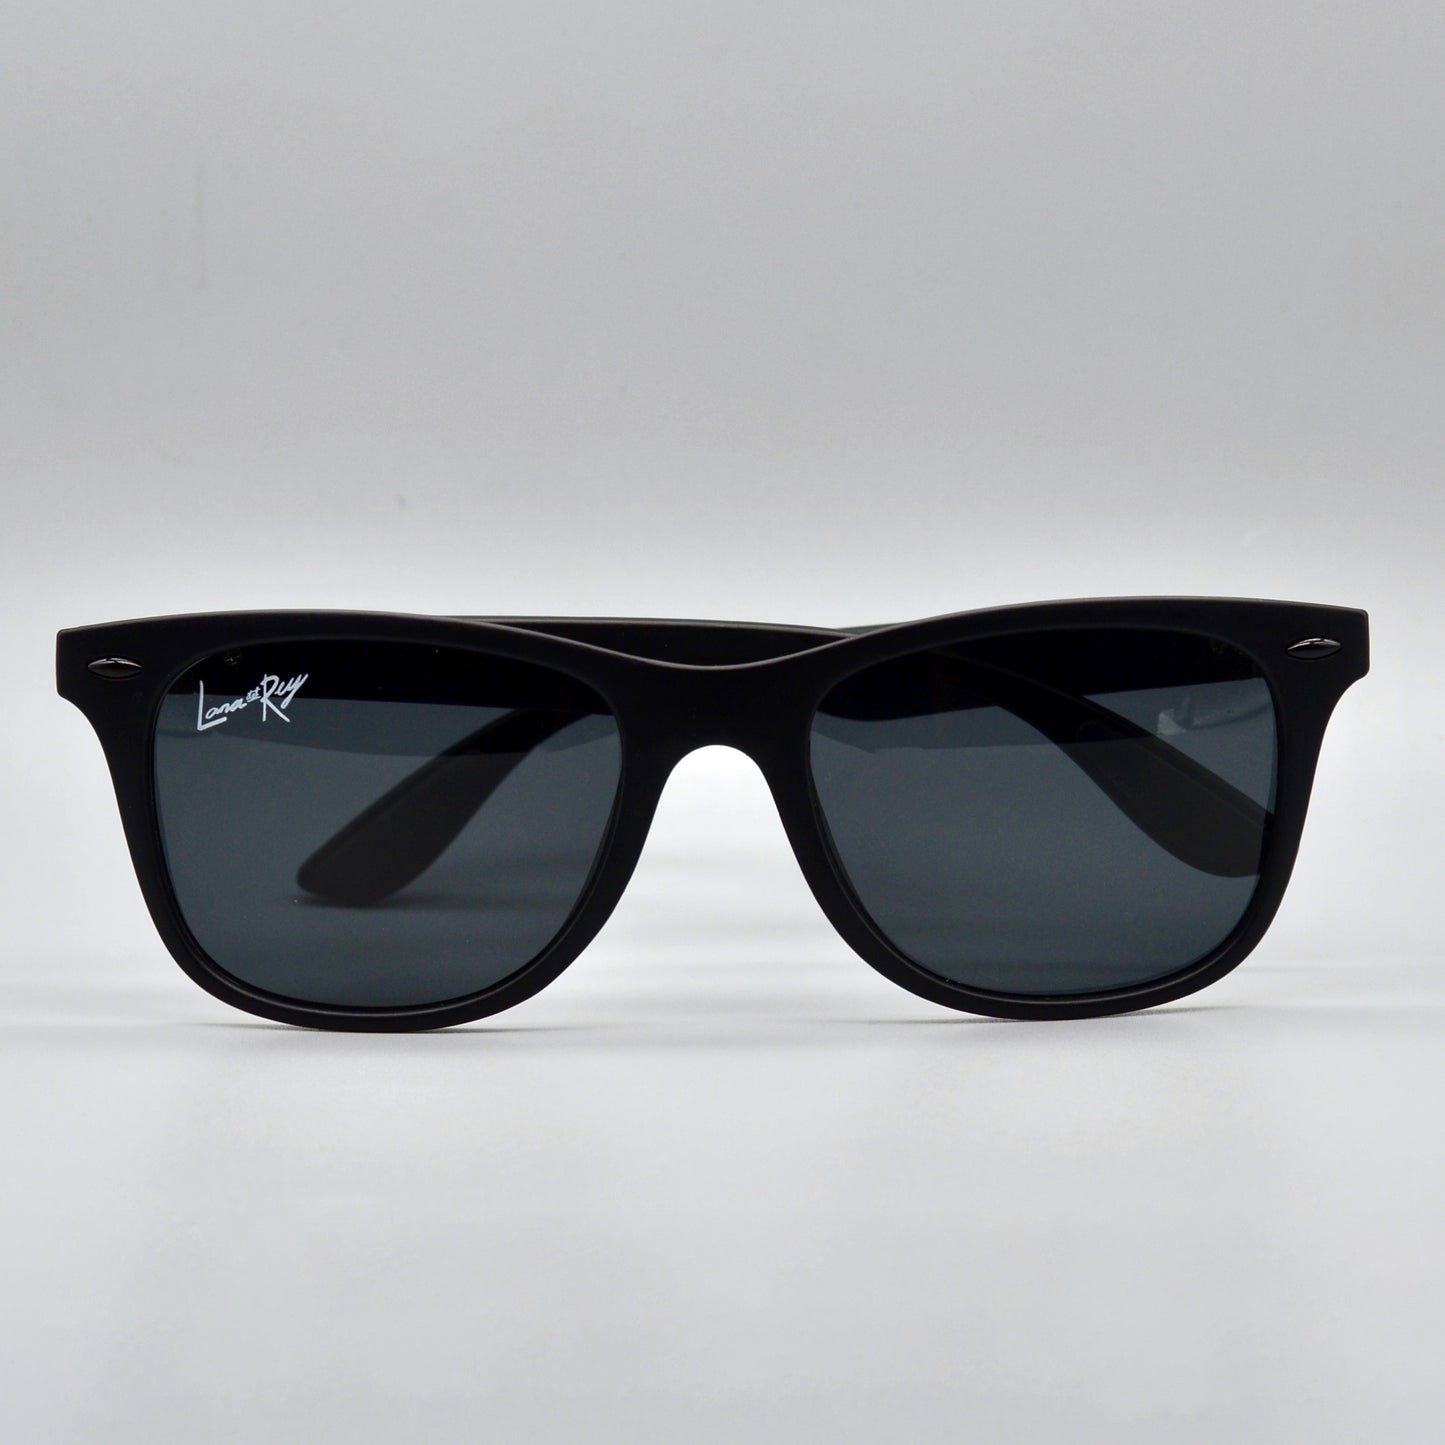 Del Rey Ban Wayfarer Sunglasses